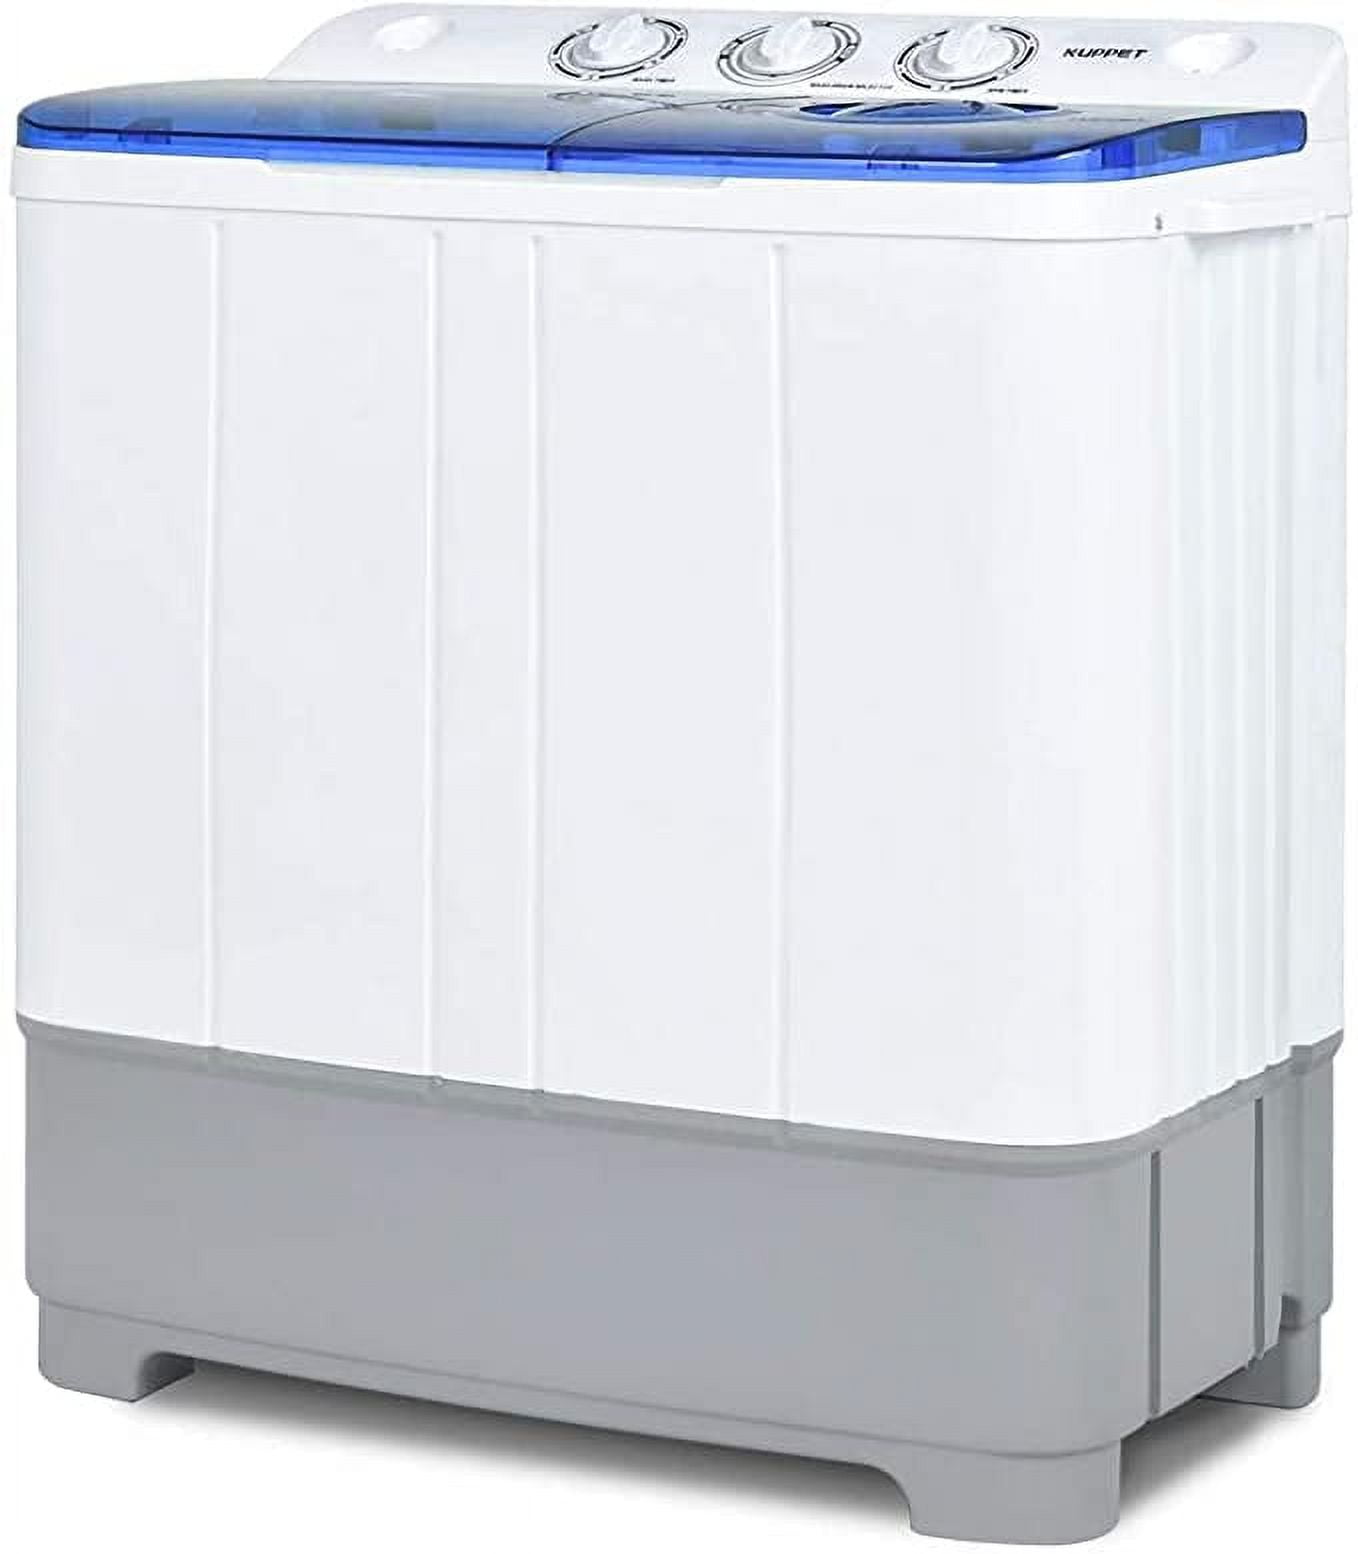 KUPPET Washing Machine, 21Ibs Portable Mini Compact Twin Tub